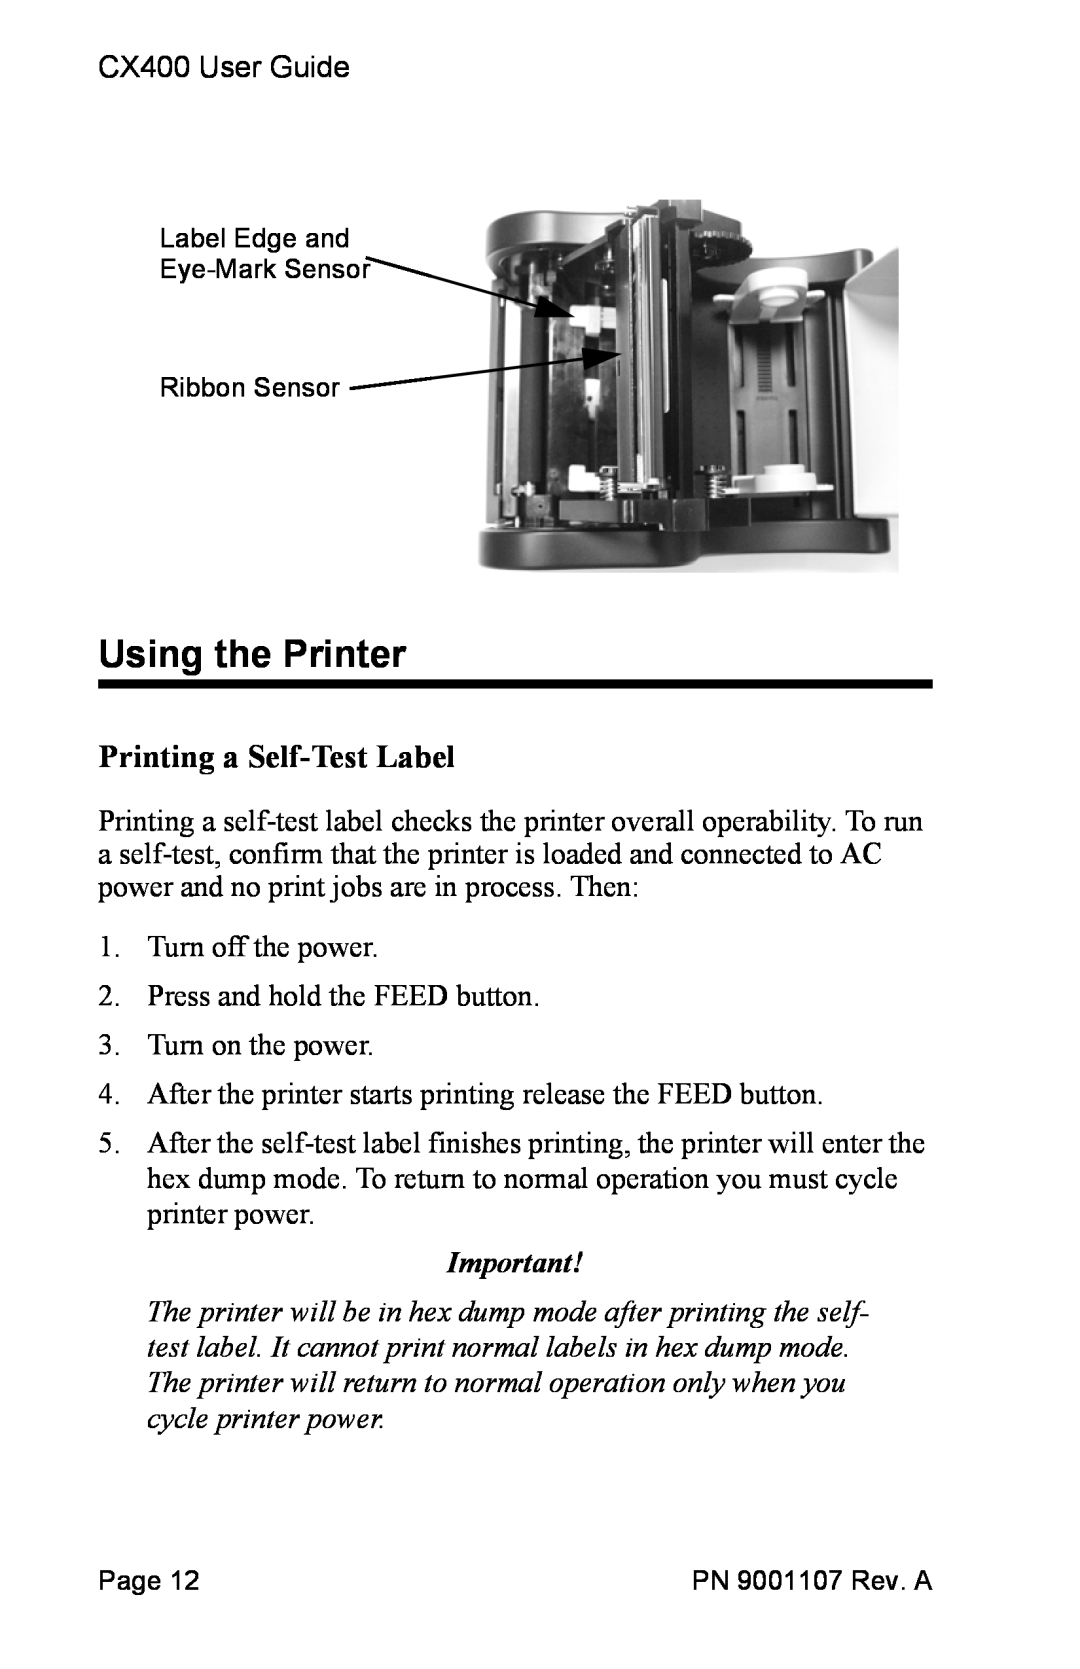 SATO 400 manual Using the Printer, Printing a Self-Test Label 